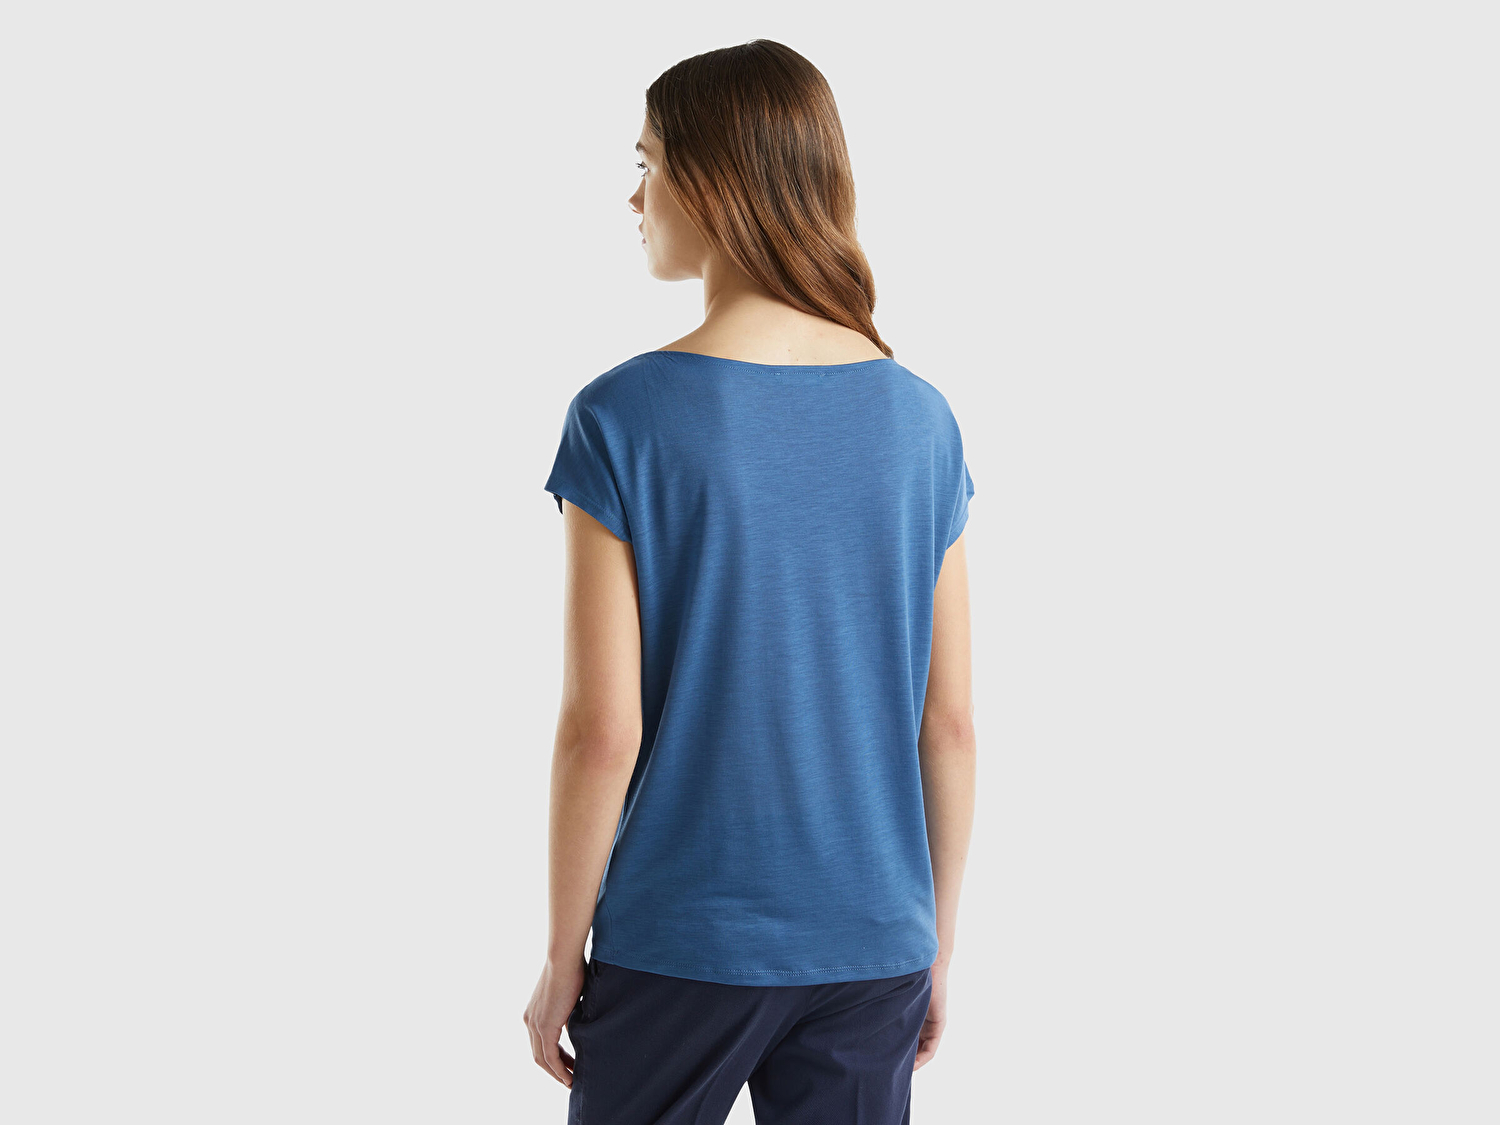 Benetton Kadın Gece Mavisi %100 Liyosel Kimono Kollu Kayık Yaka T-Shirt